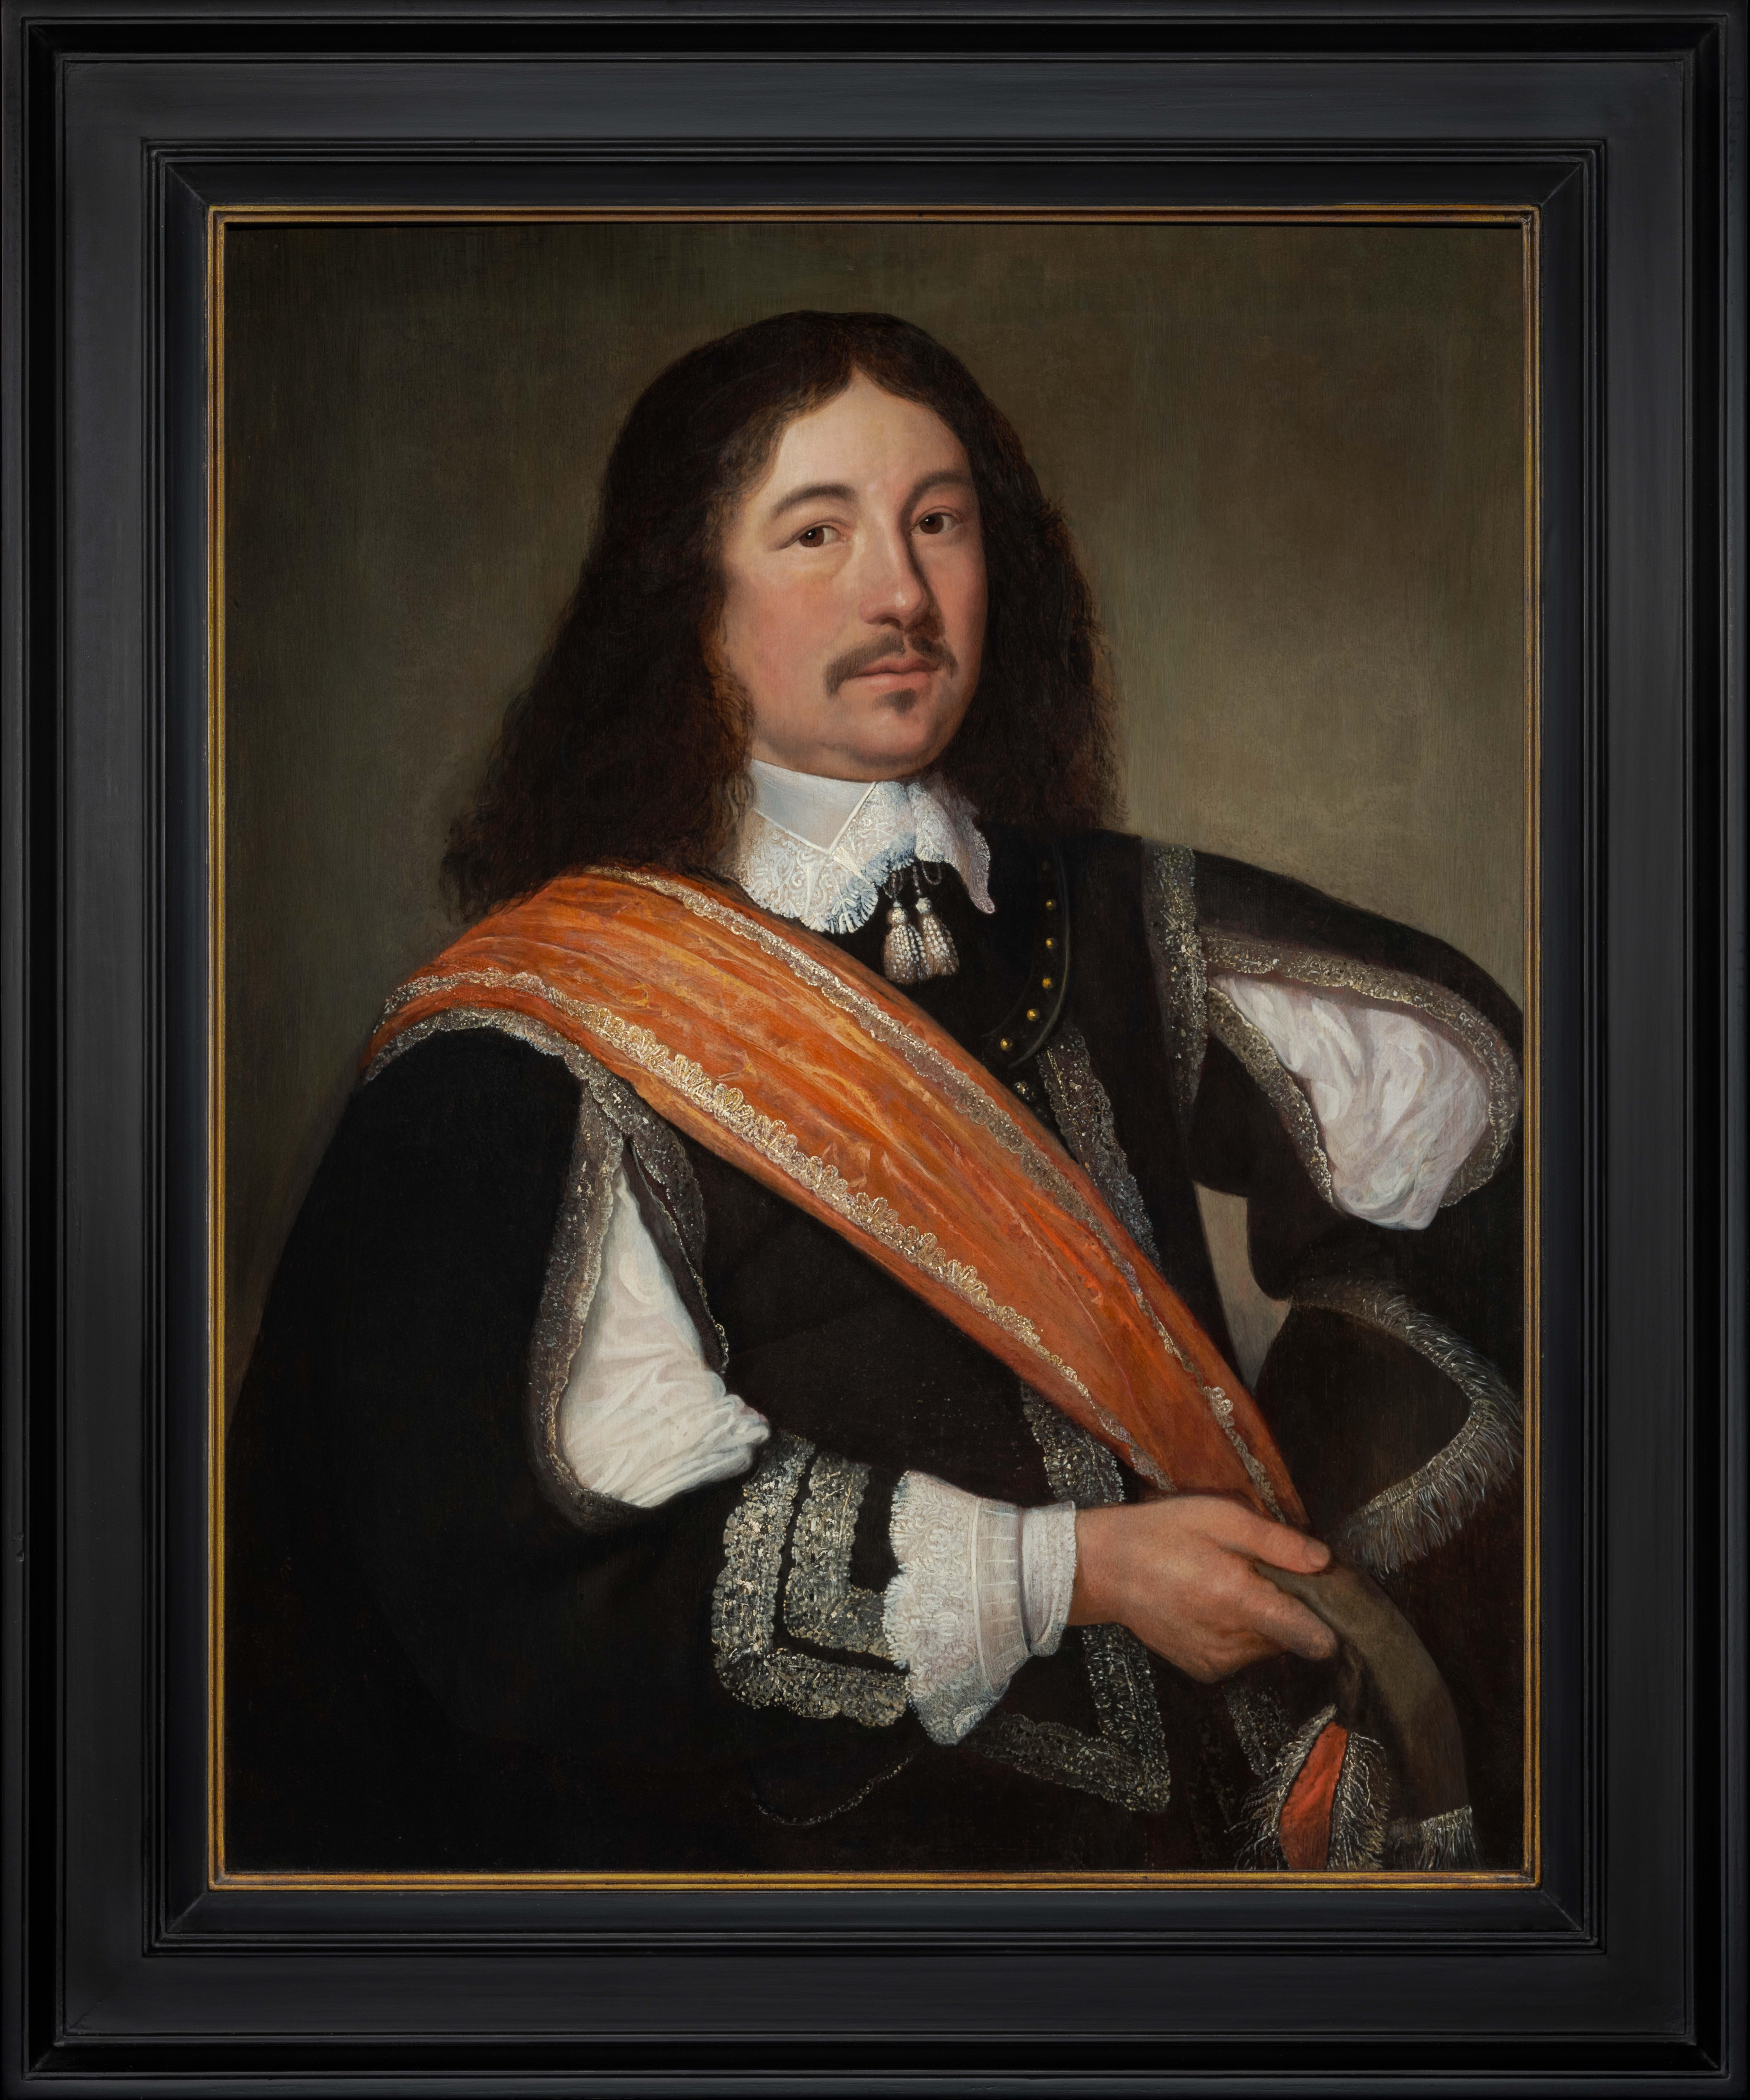 Portrait Gentleman Black Coat Orange Sash, Dutch Old Master, Oil on Panel c.1650